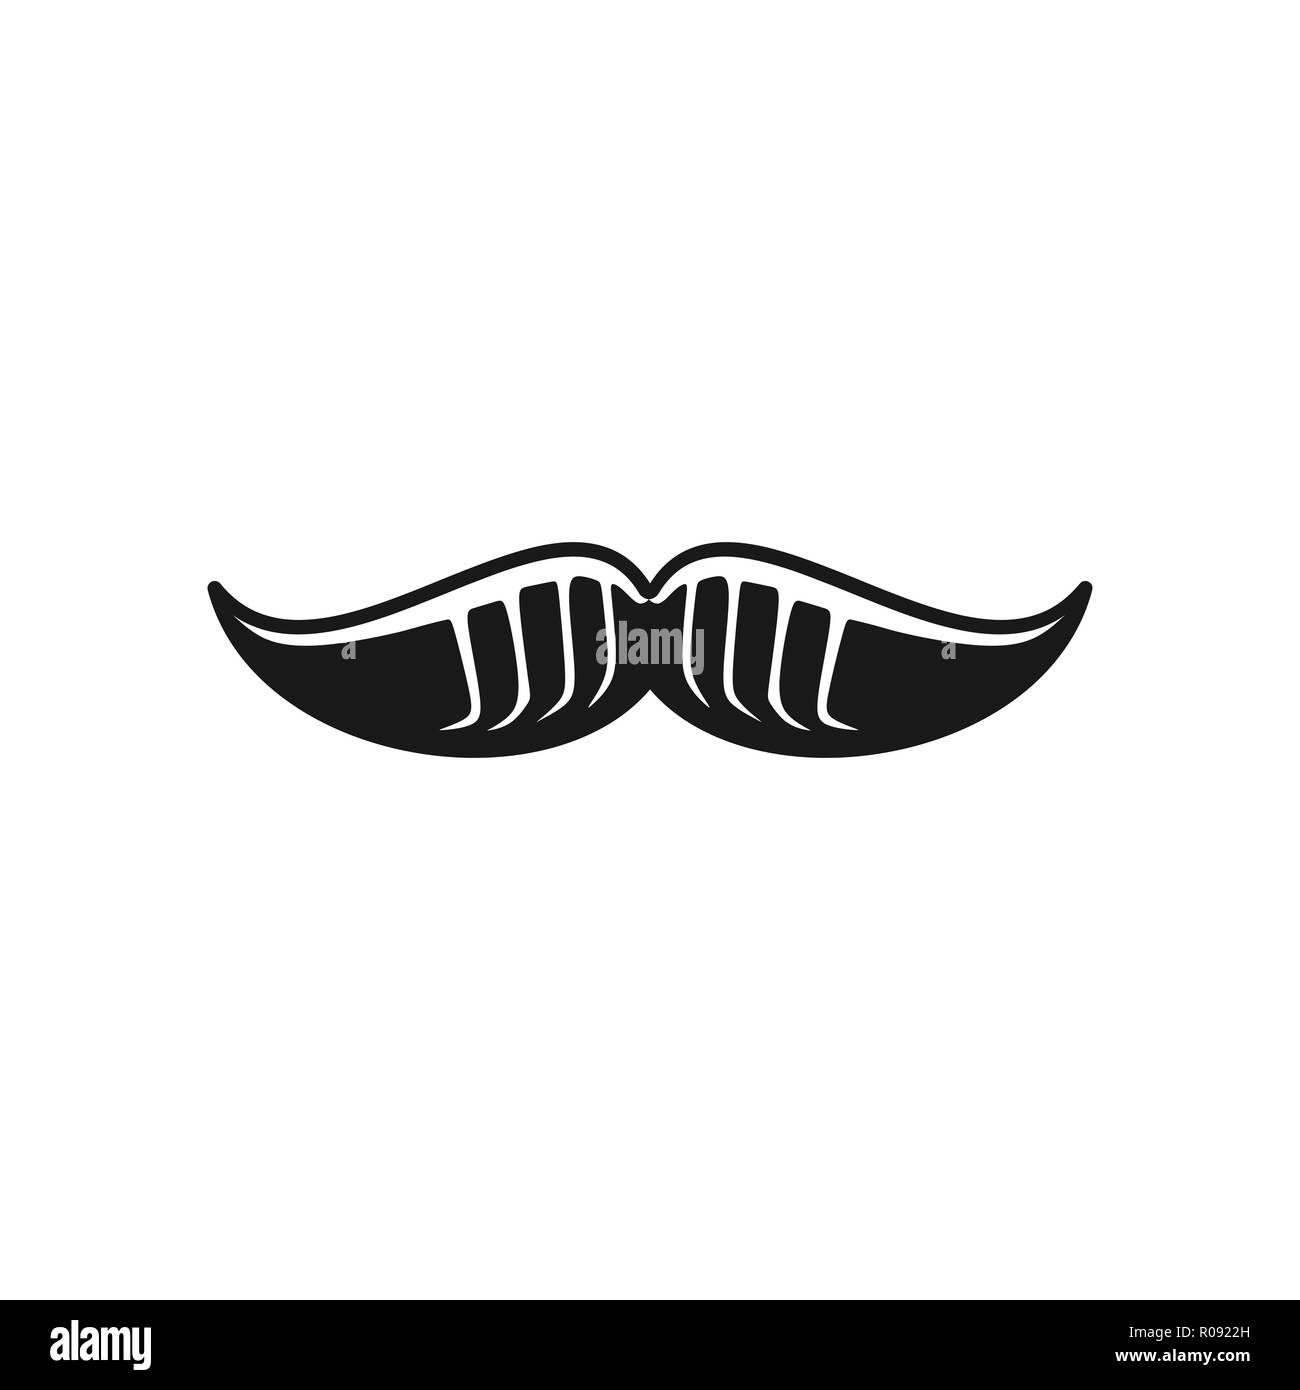 mustache logo design inspiration Stock Vector